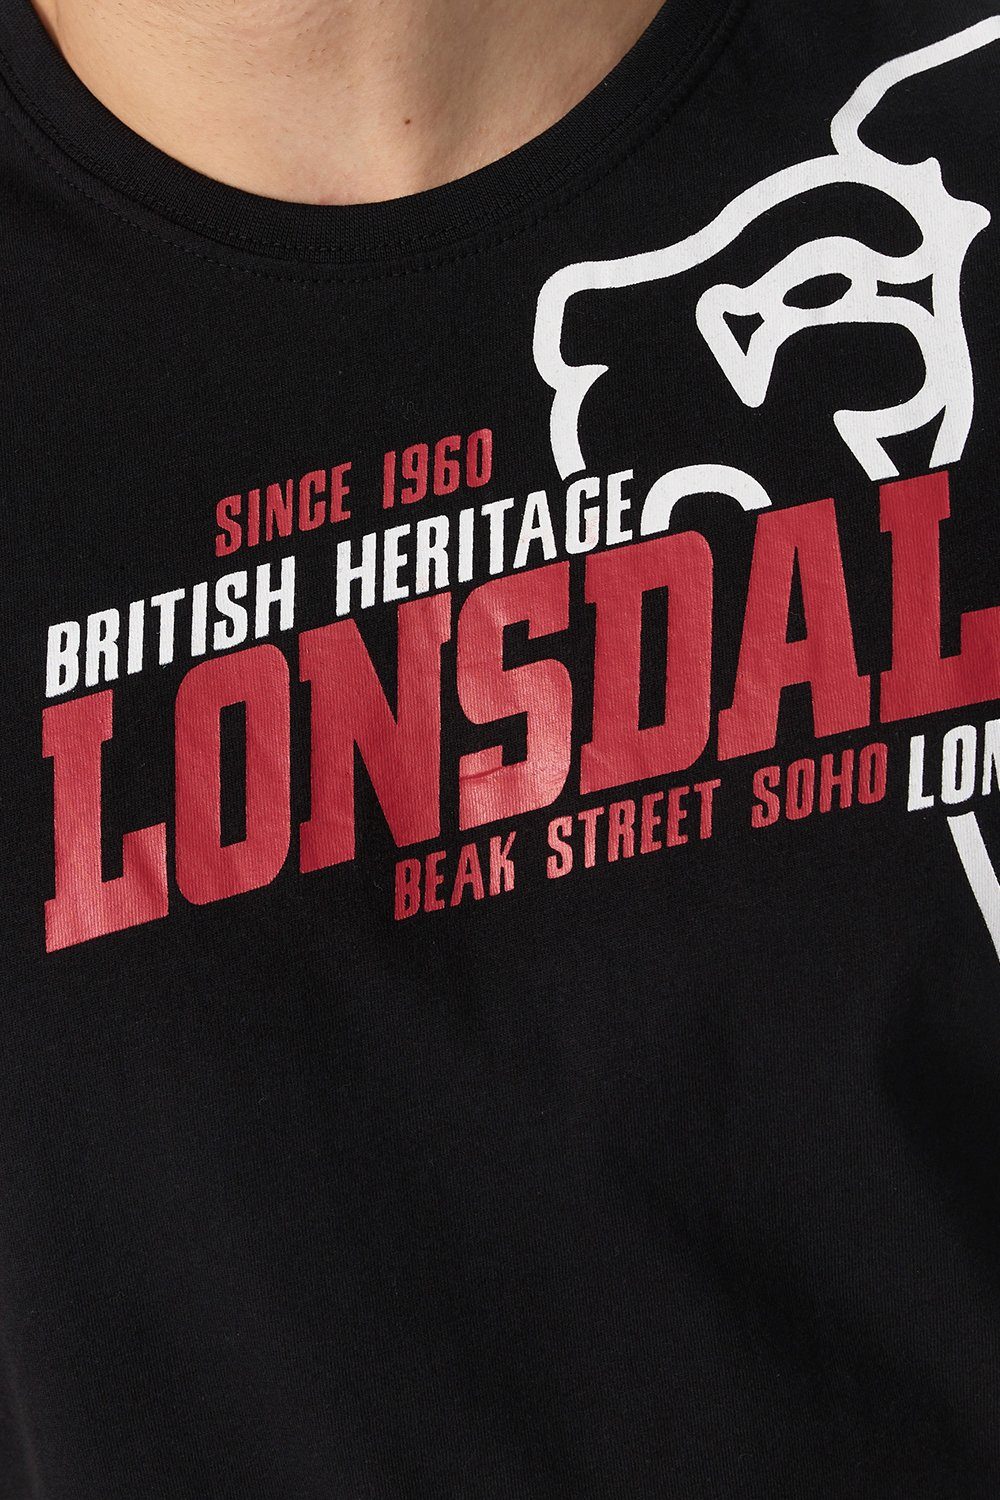 Lonsdale T-Shirt WALKLEY Black